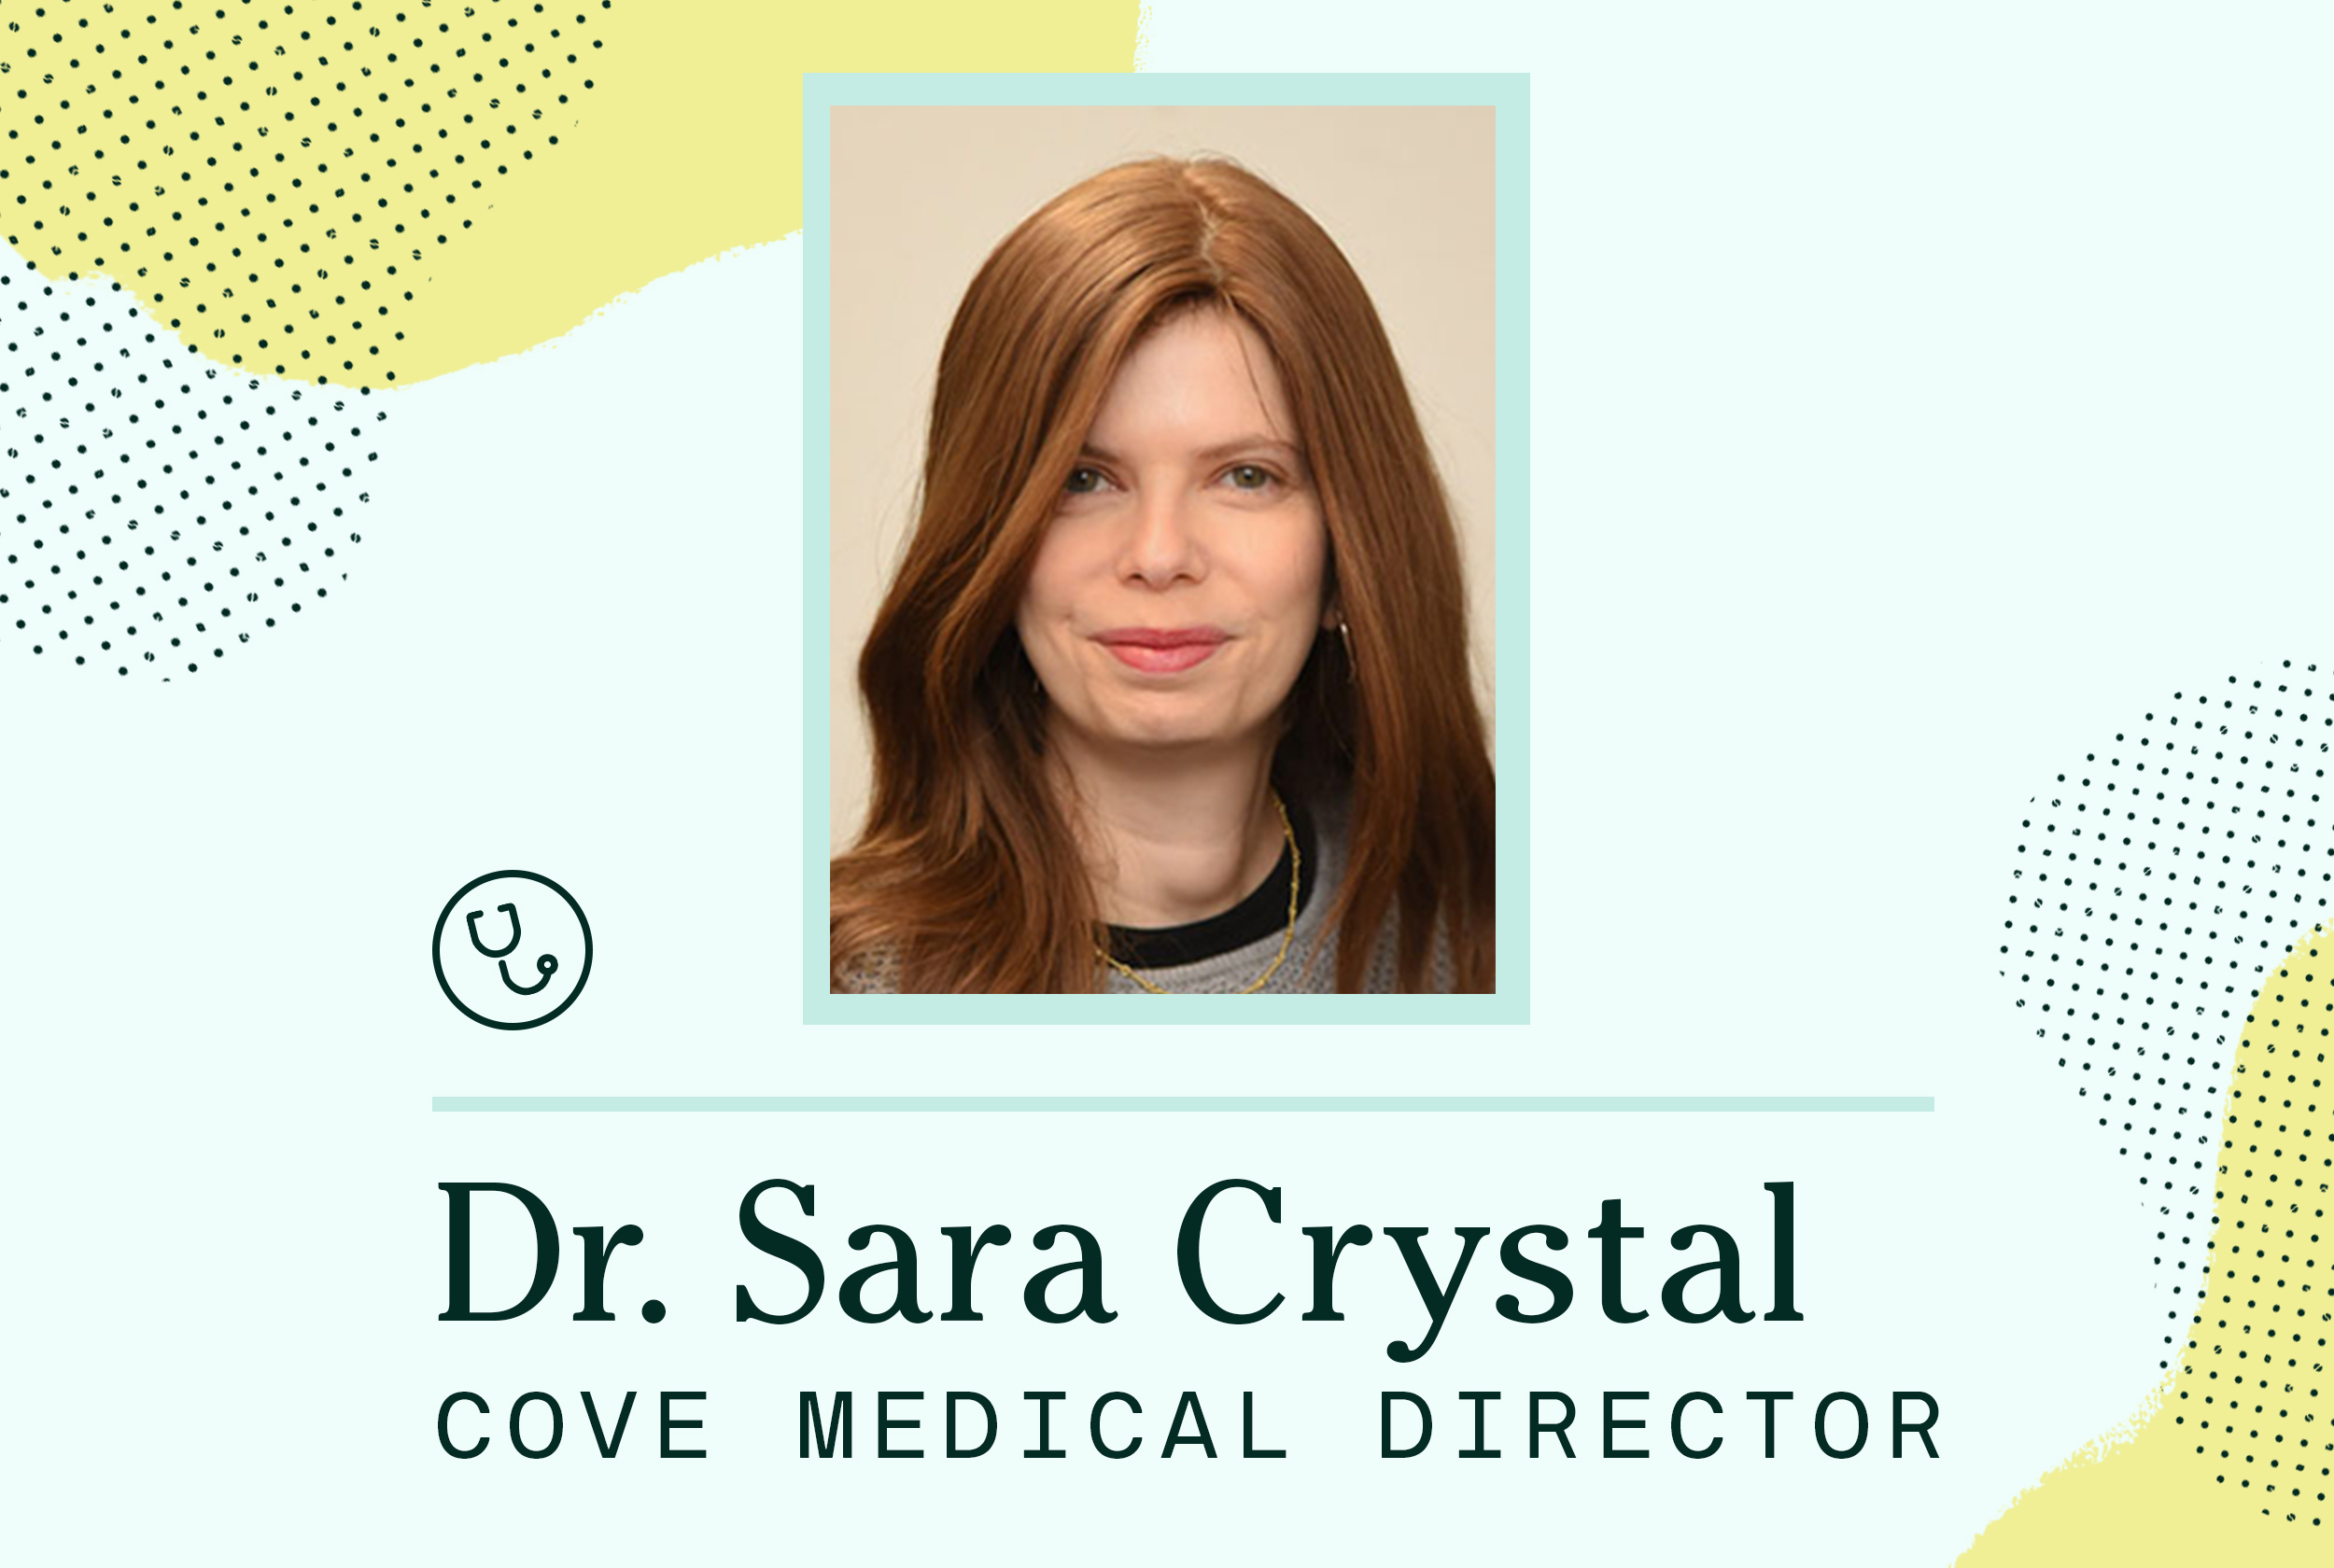 Dr. Sara Crystal